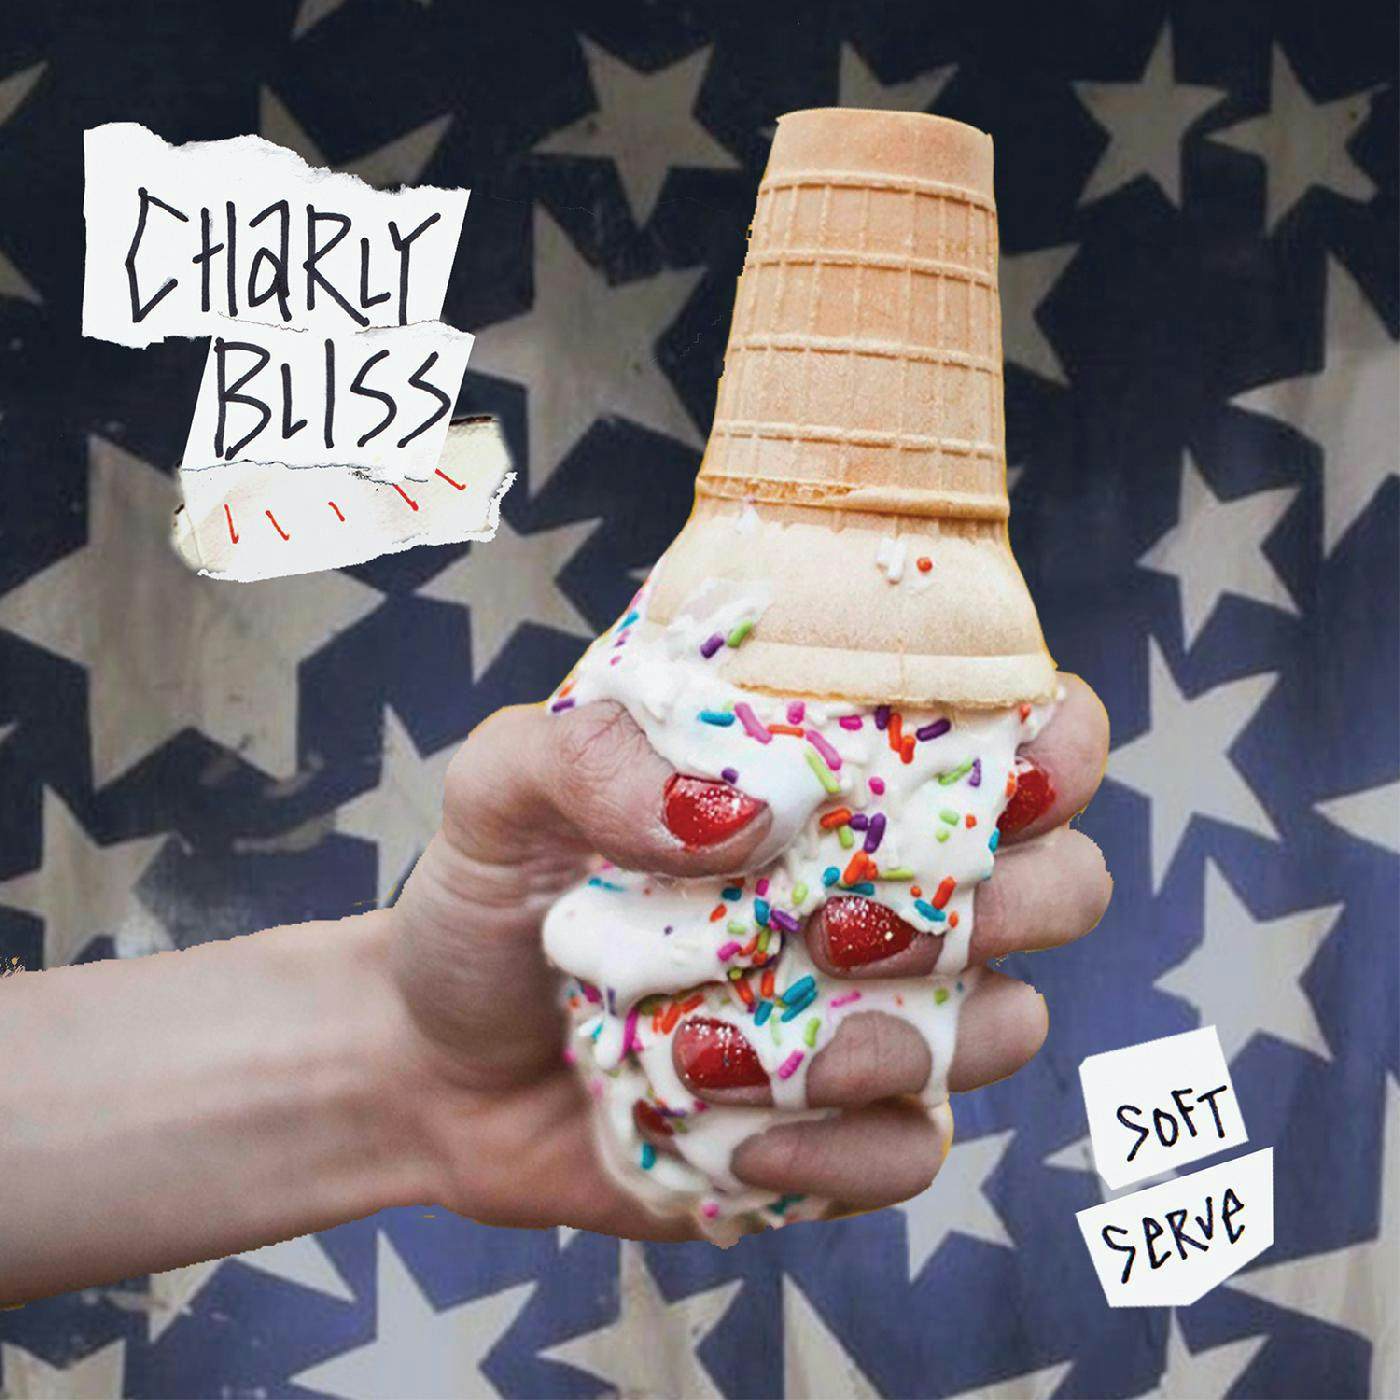 Charly Bliss Soft Serve Vinyl Record